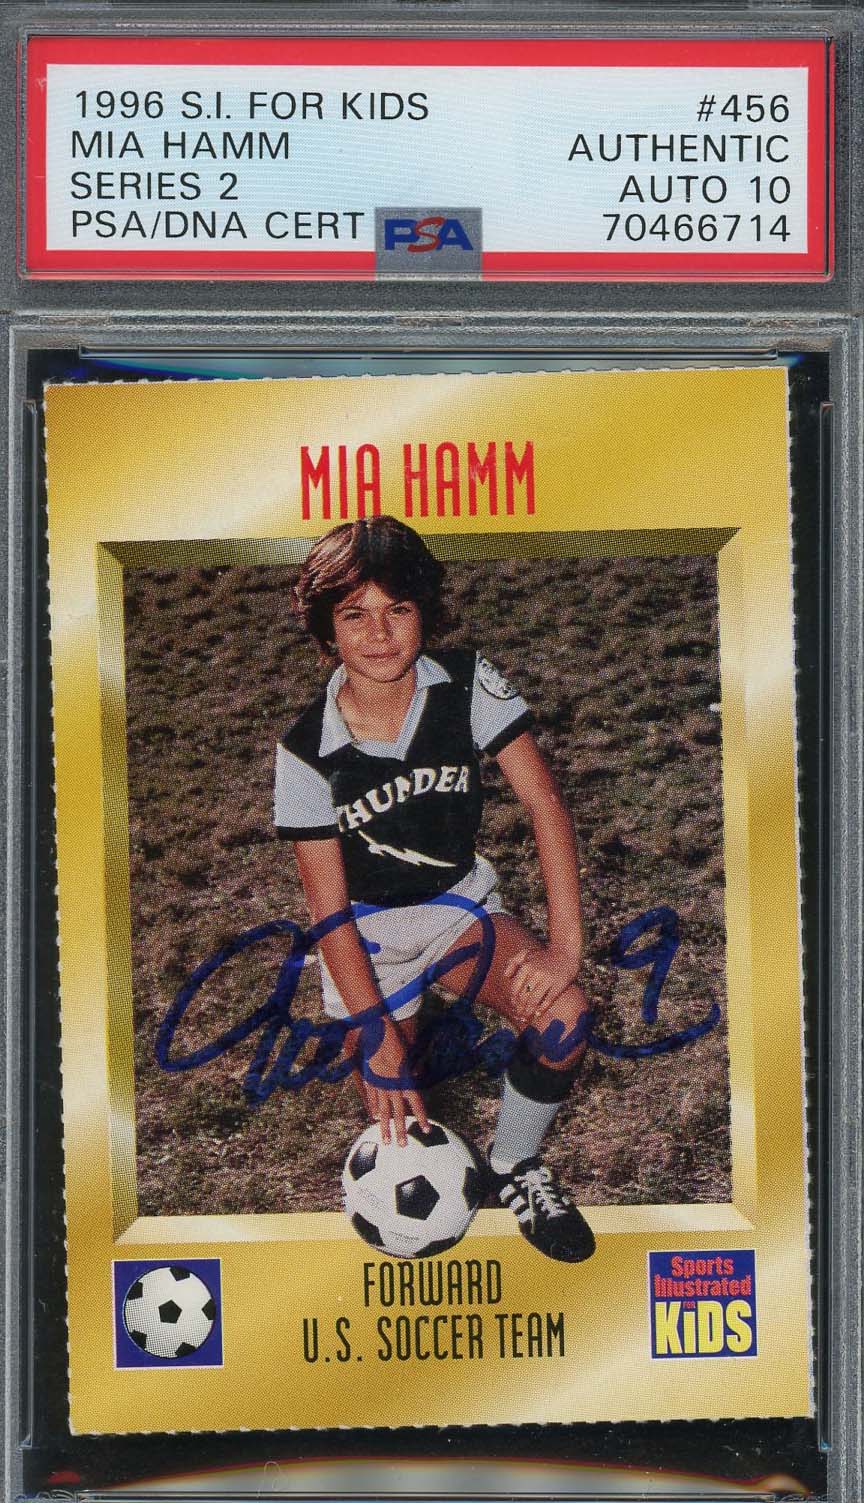 Mia Hamm 1996 S.I. For Kids Series 2 Signed Card #456 Auto PSA 10 70466714-Powers Sports Memorabilia